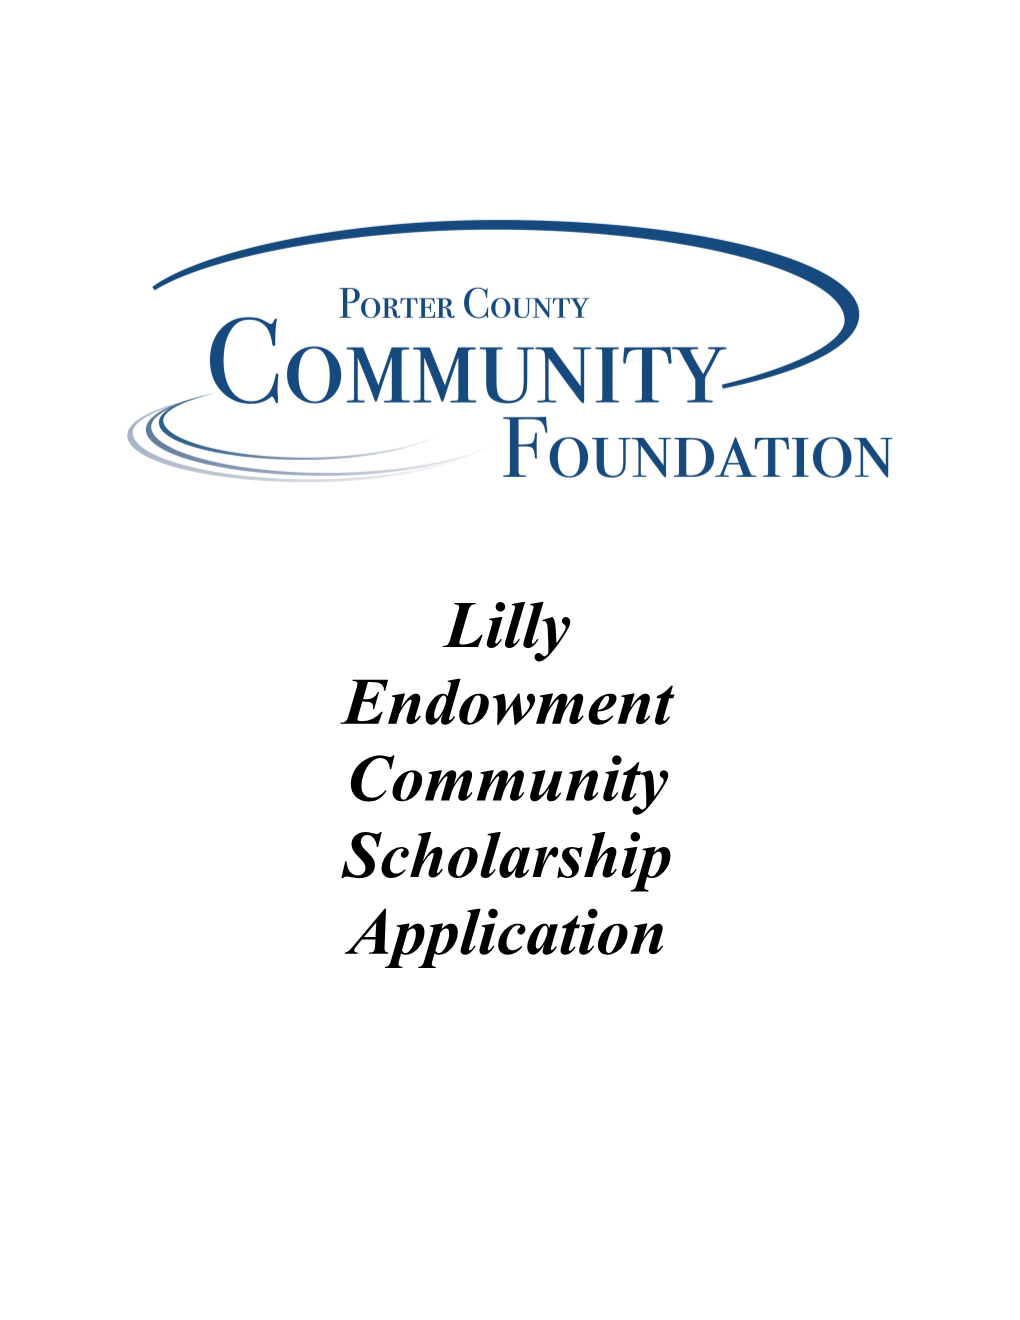 Porter County Community Foundation, Inc